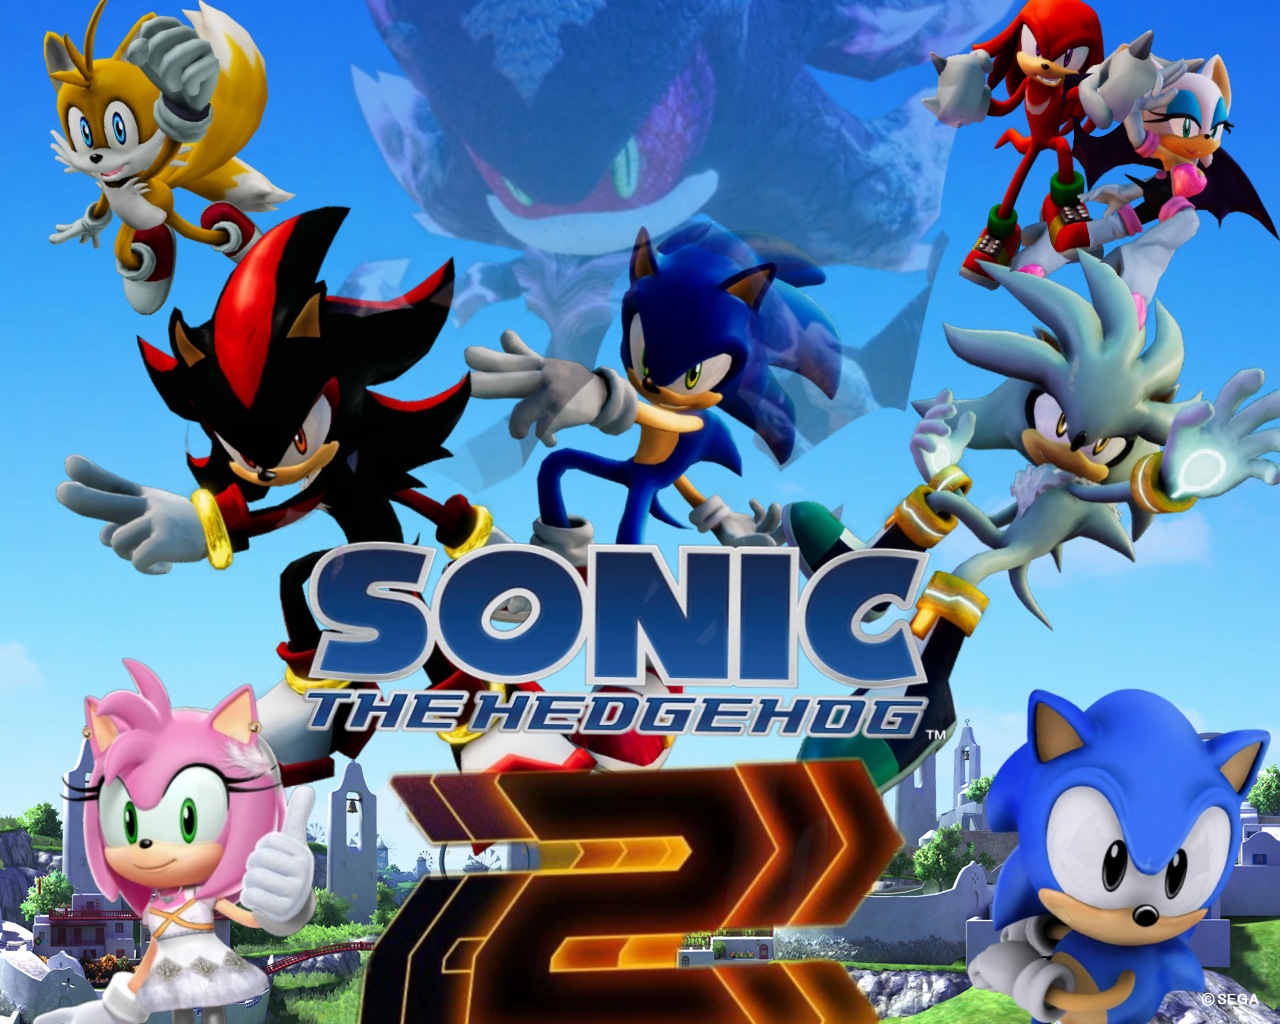 Sonic Prime season 2 poster 2 by Nikisawesom on DeviantArt